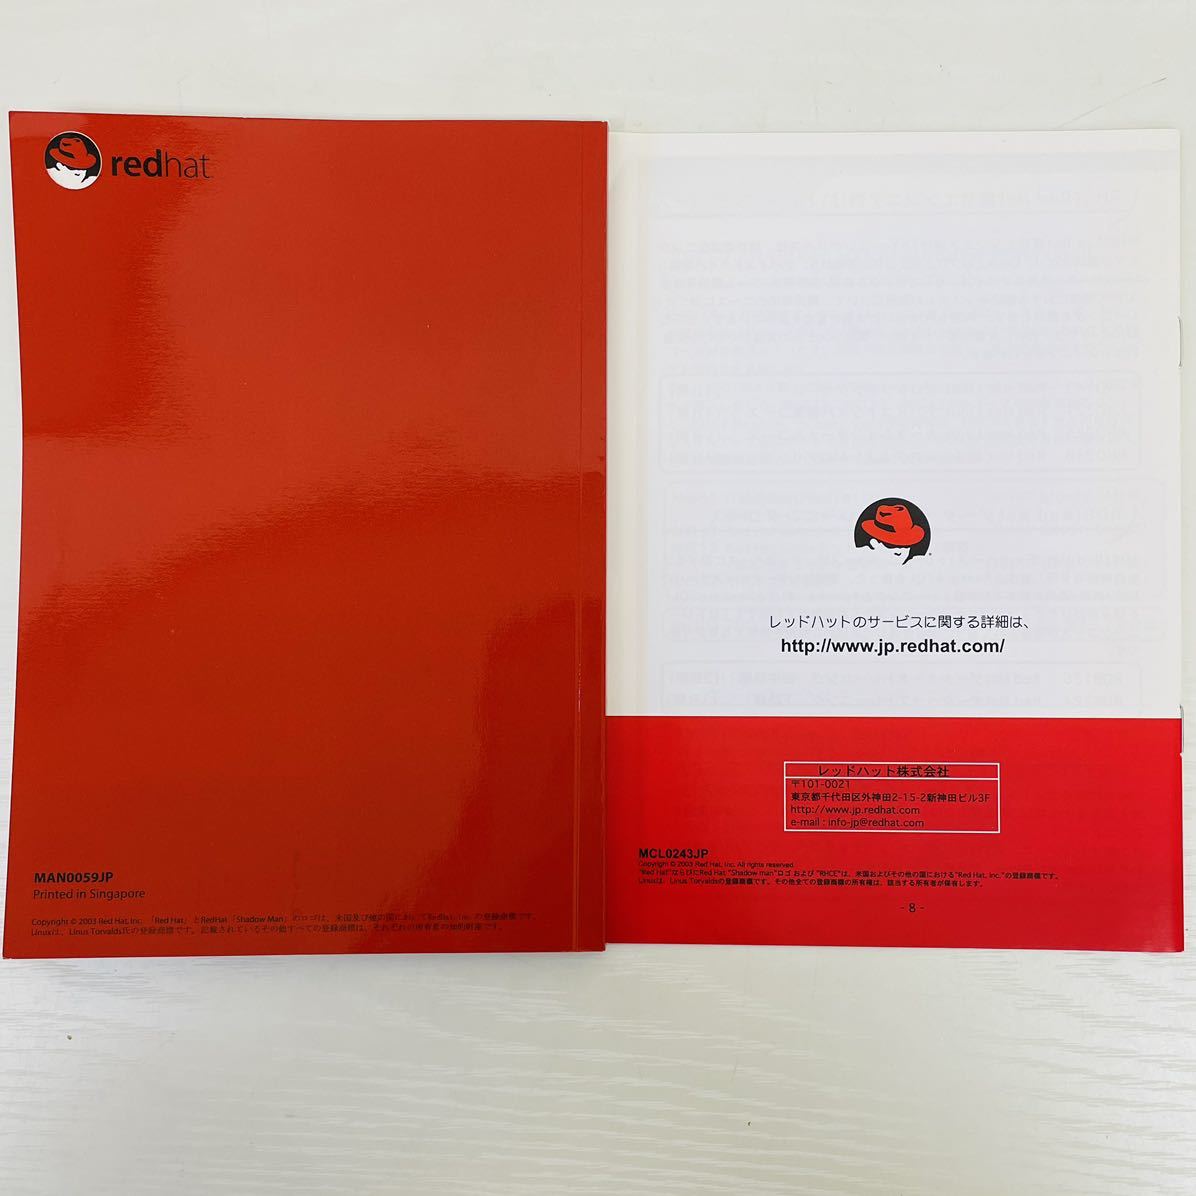 Red Hat Linux 9 operating system BOX0029JP RHF0120JP 03-APR-03 オペレーティングシステム 日本版 日本版付属アプリケーション AT_画像7